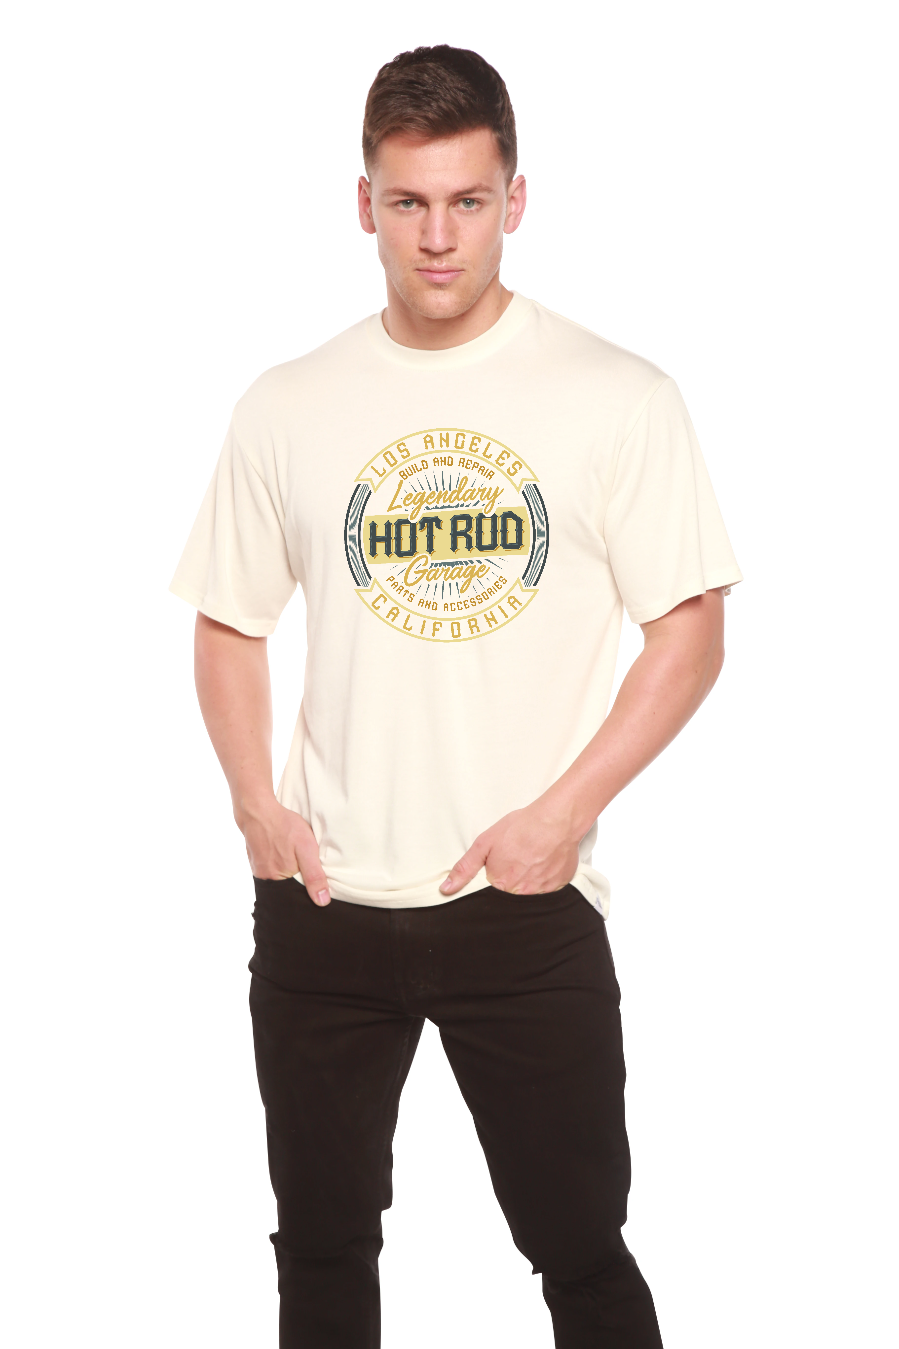 HOT ROO Men's Bamboo Viscose/Organic Cotton Short Sleeve T-Shirt - Spun Bamboo